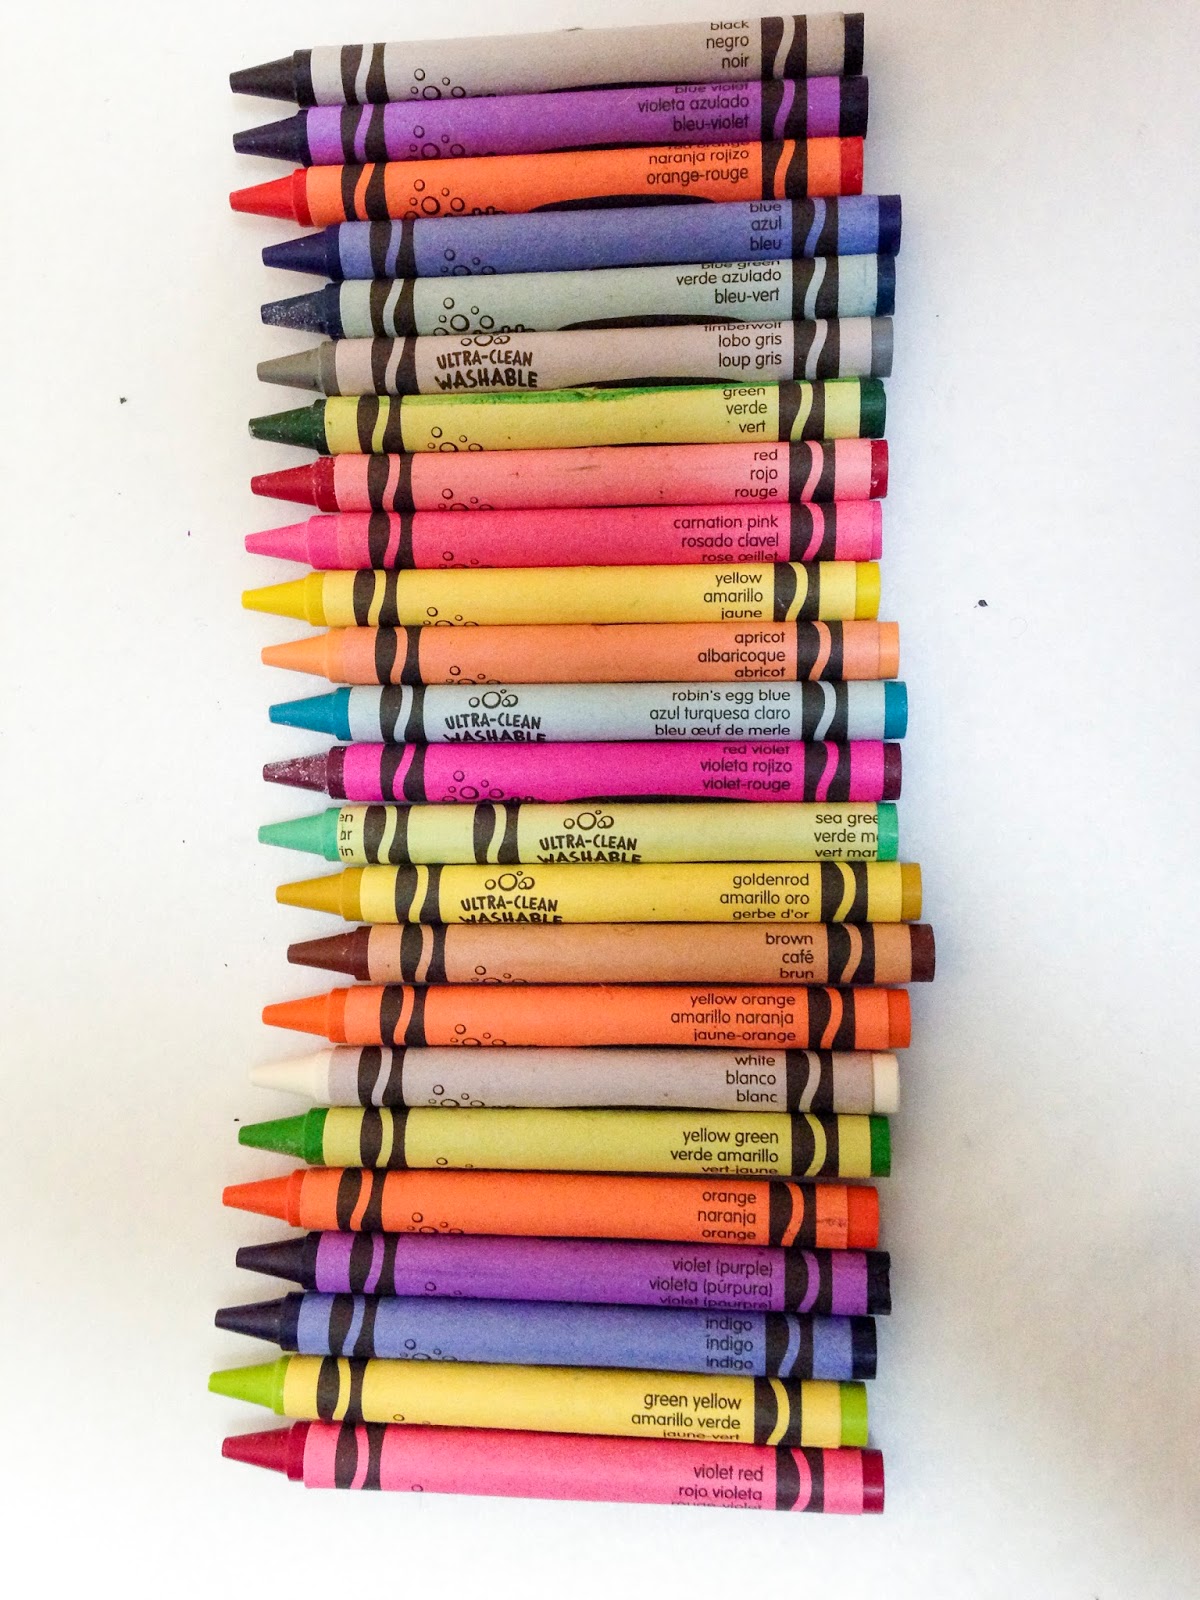 Crayola 24 Washable Crayons